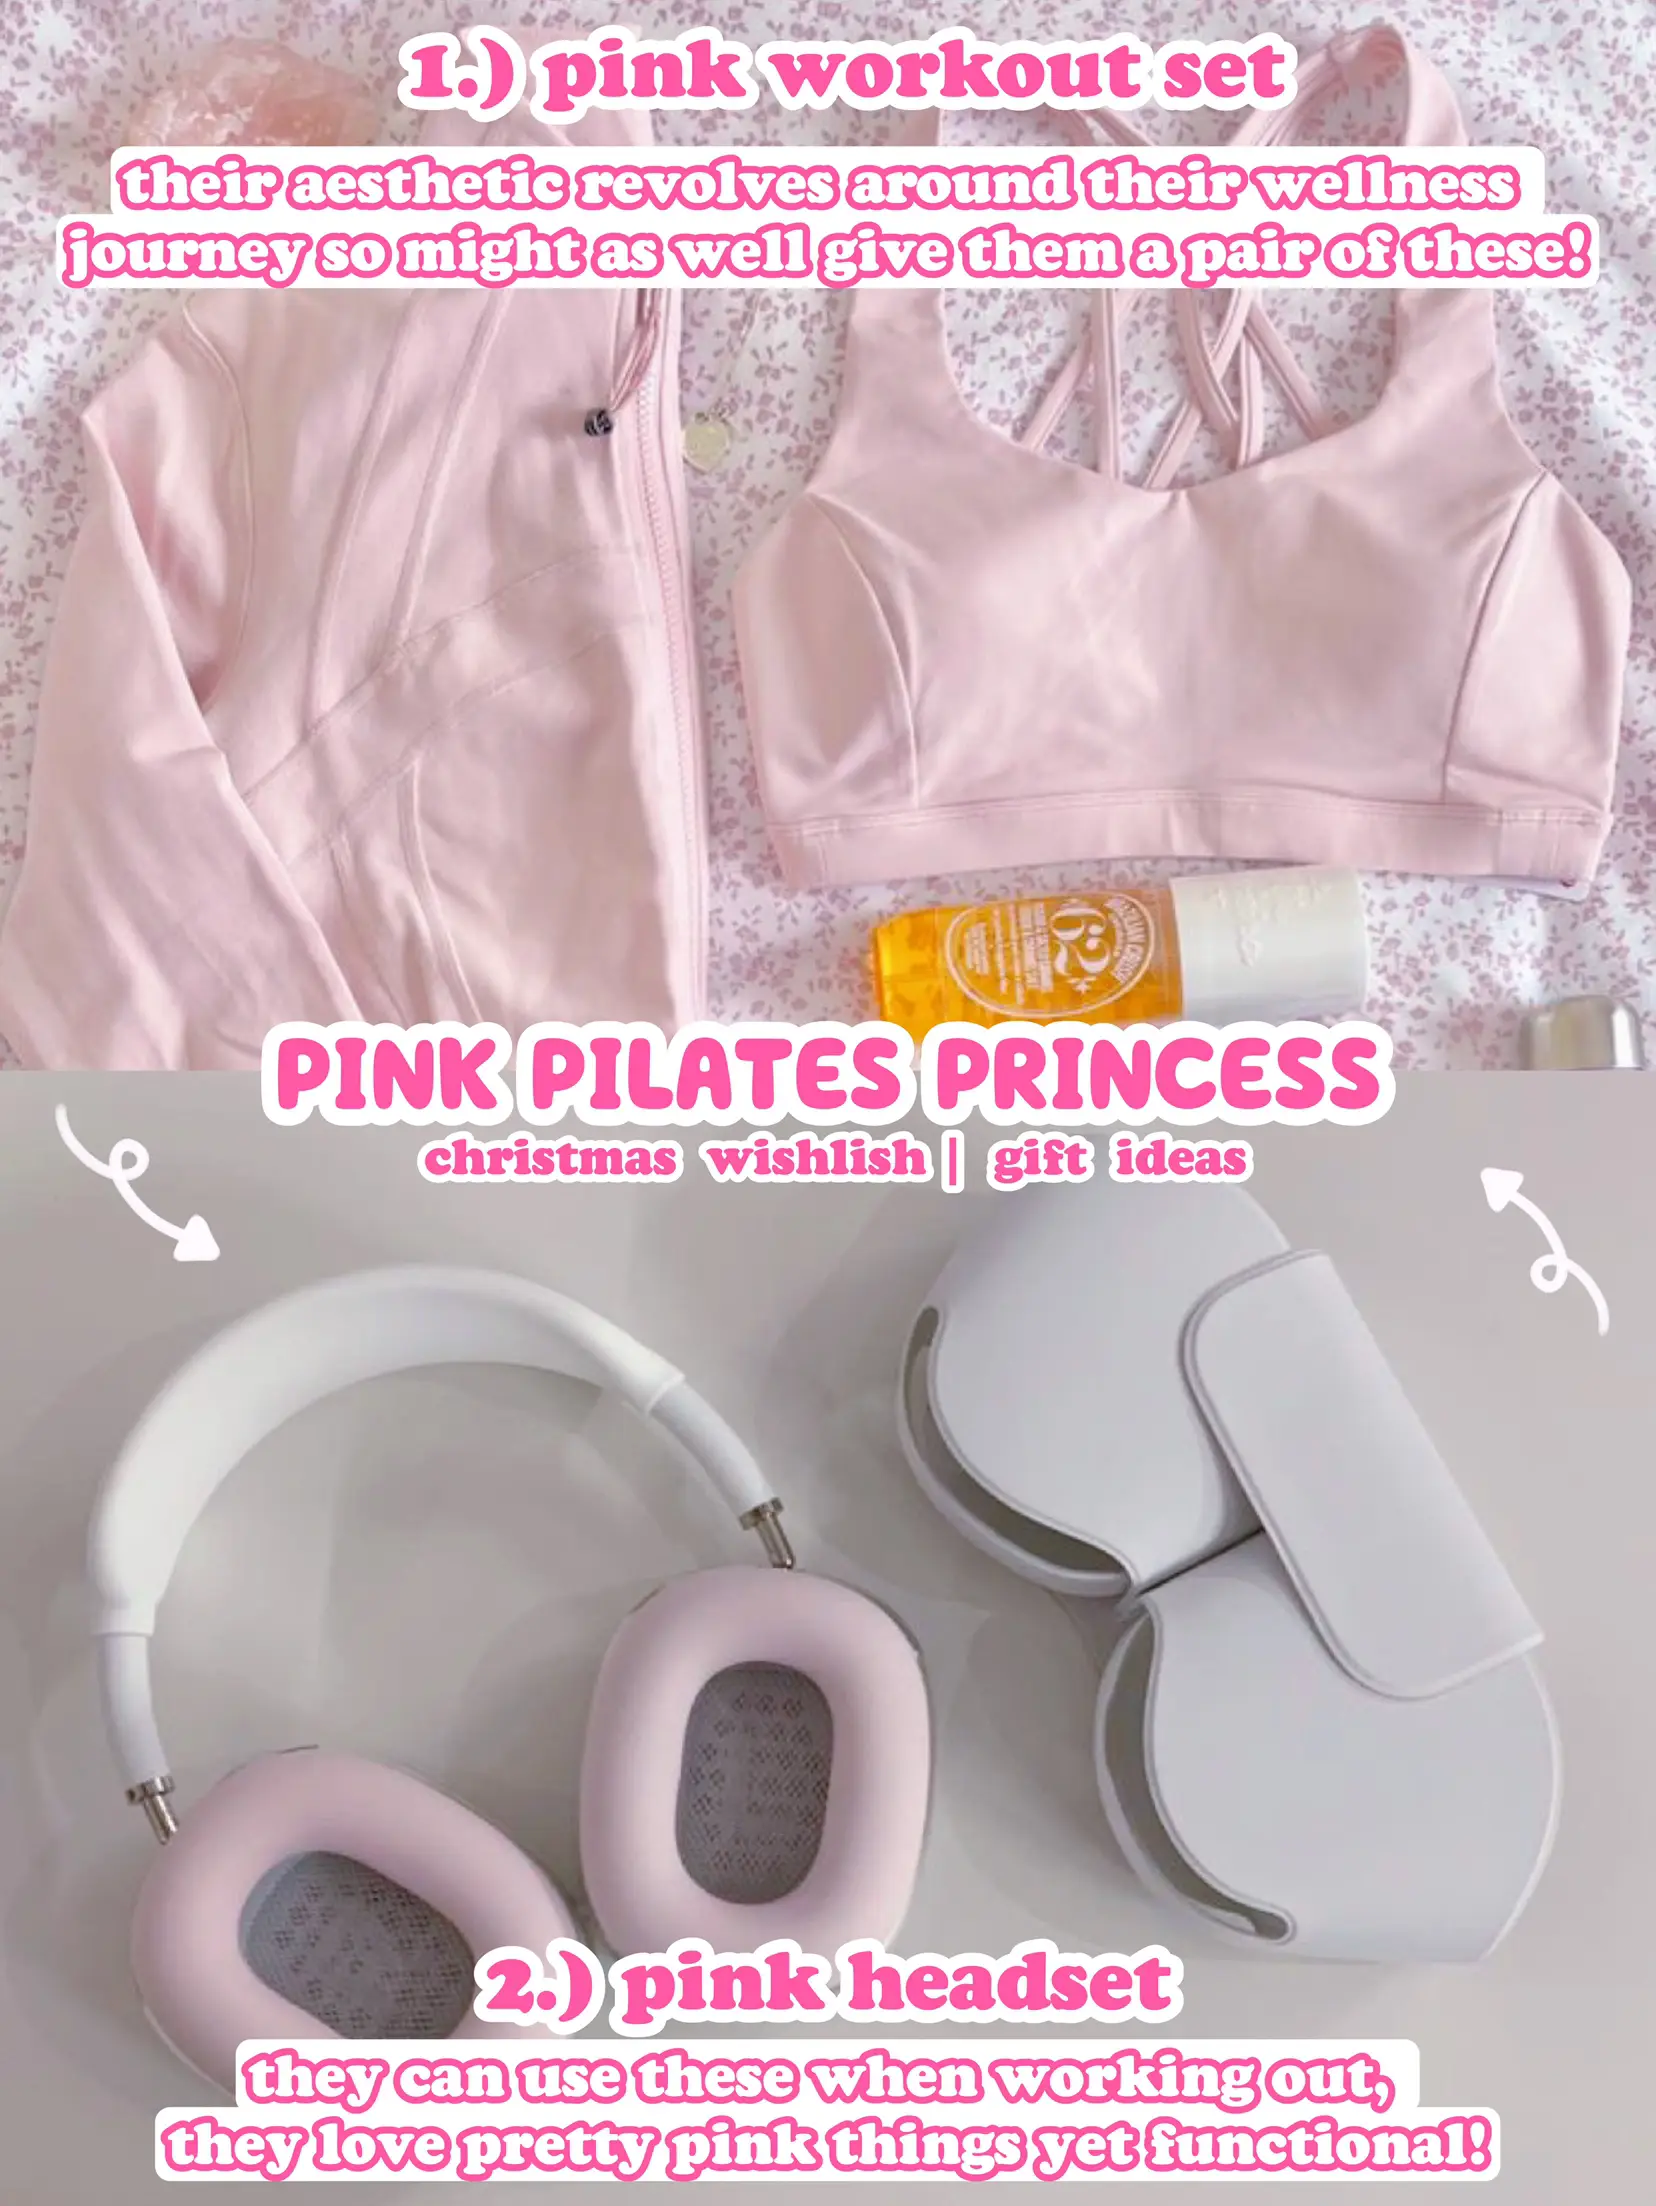 Christmas gift ideas for pink Pilates princess pt 2